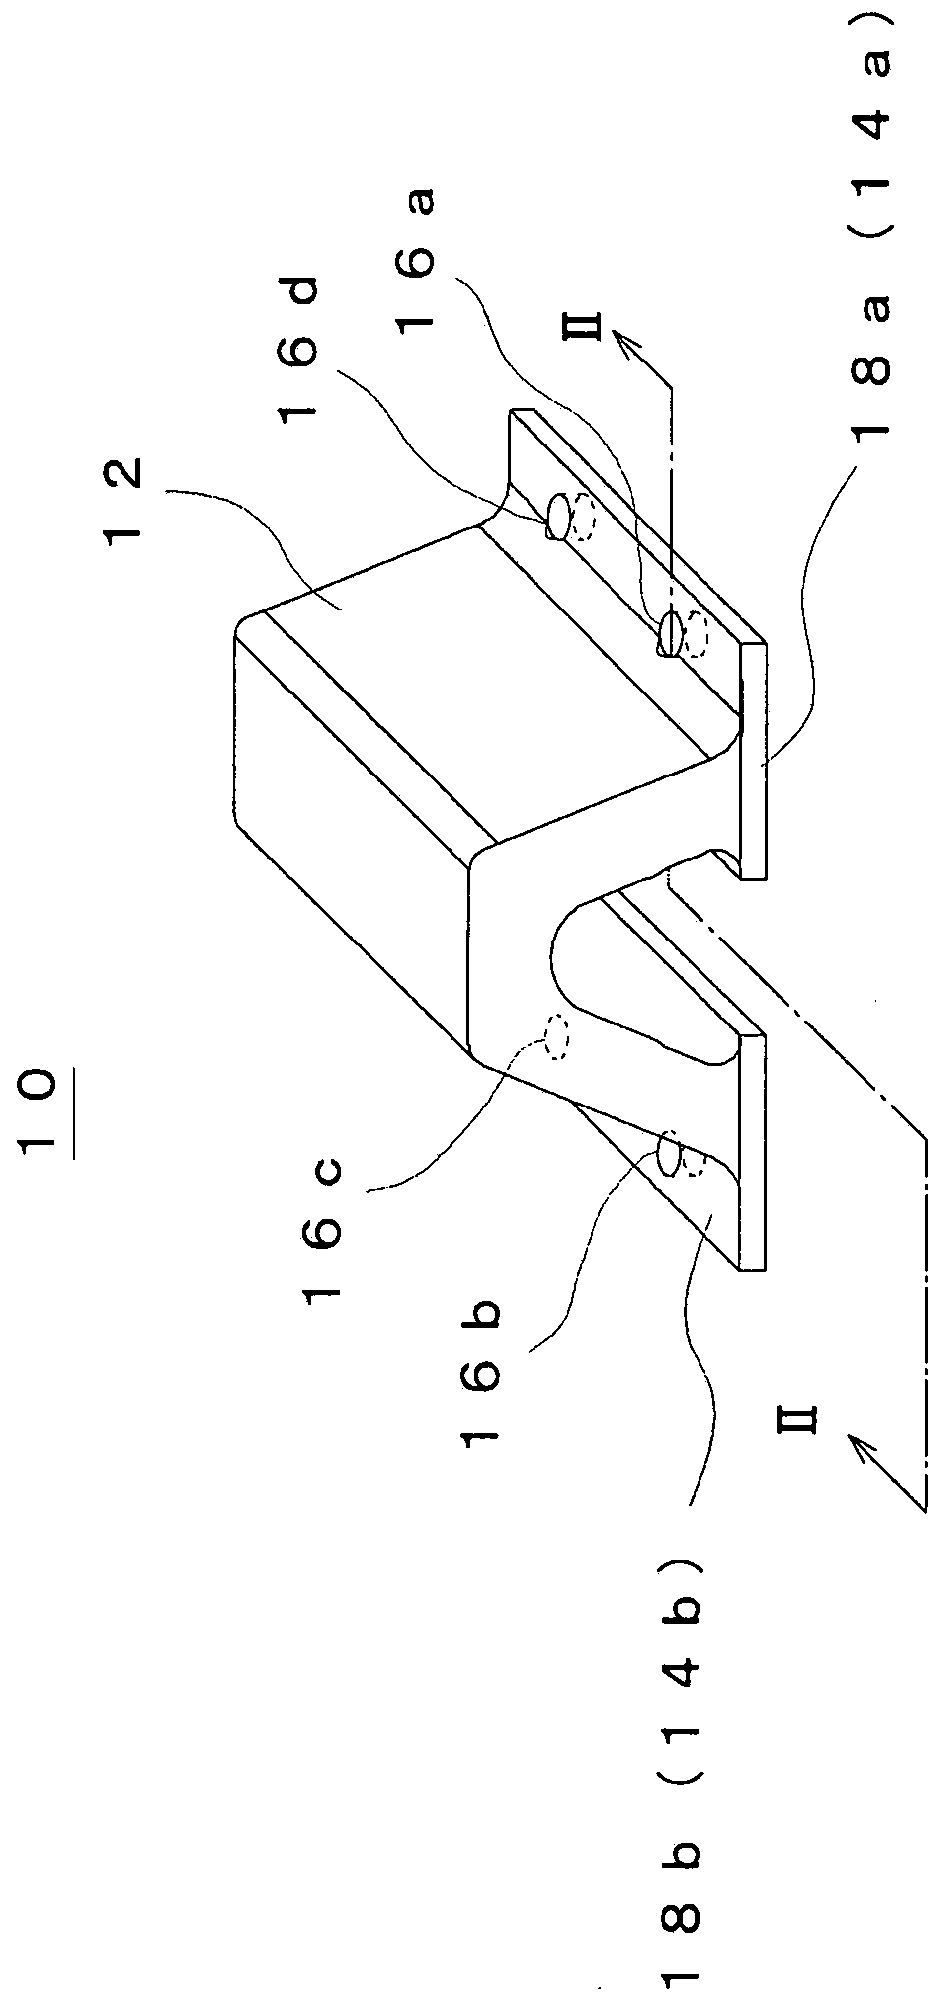 Fender, installation method of fender and manufacturing method of fender